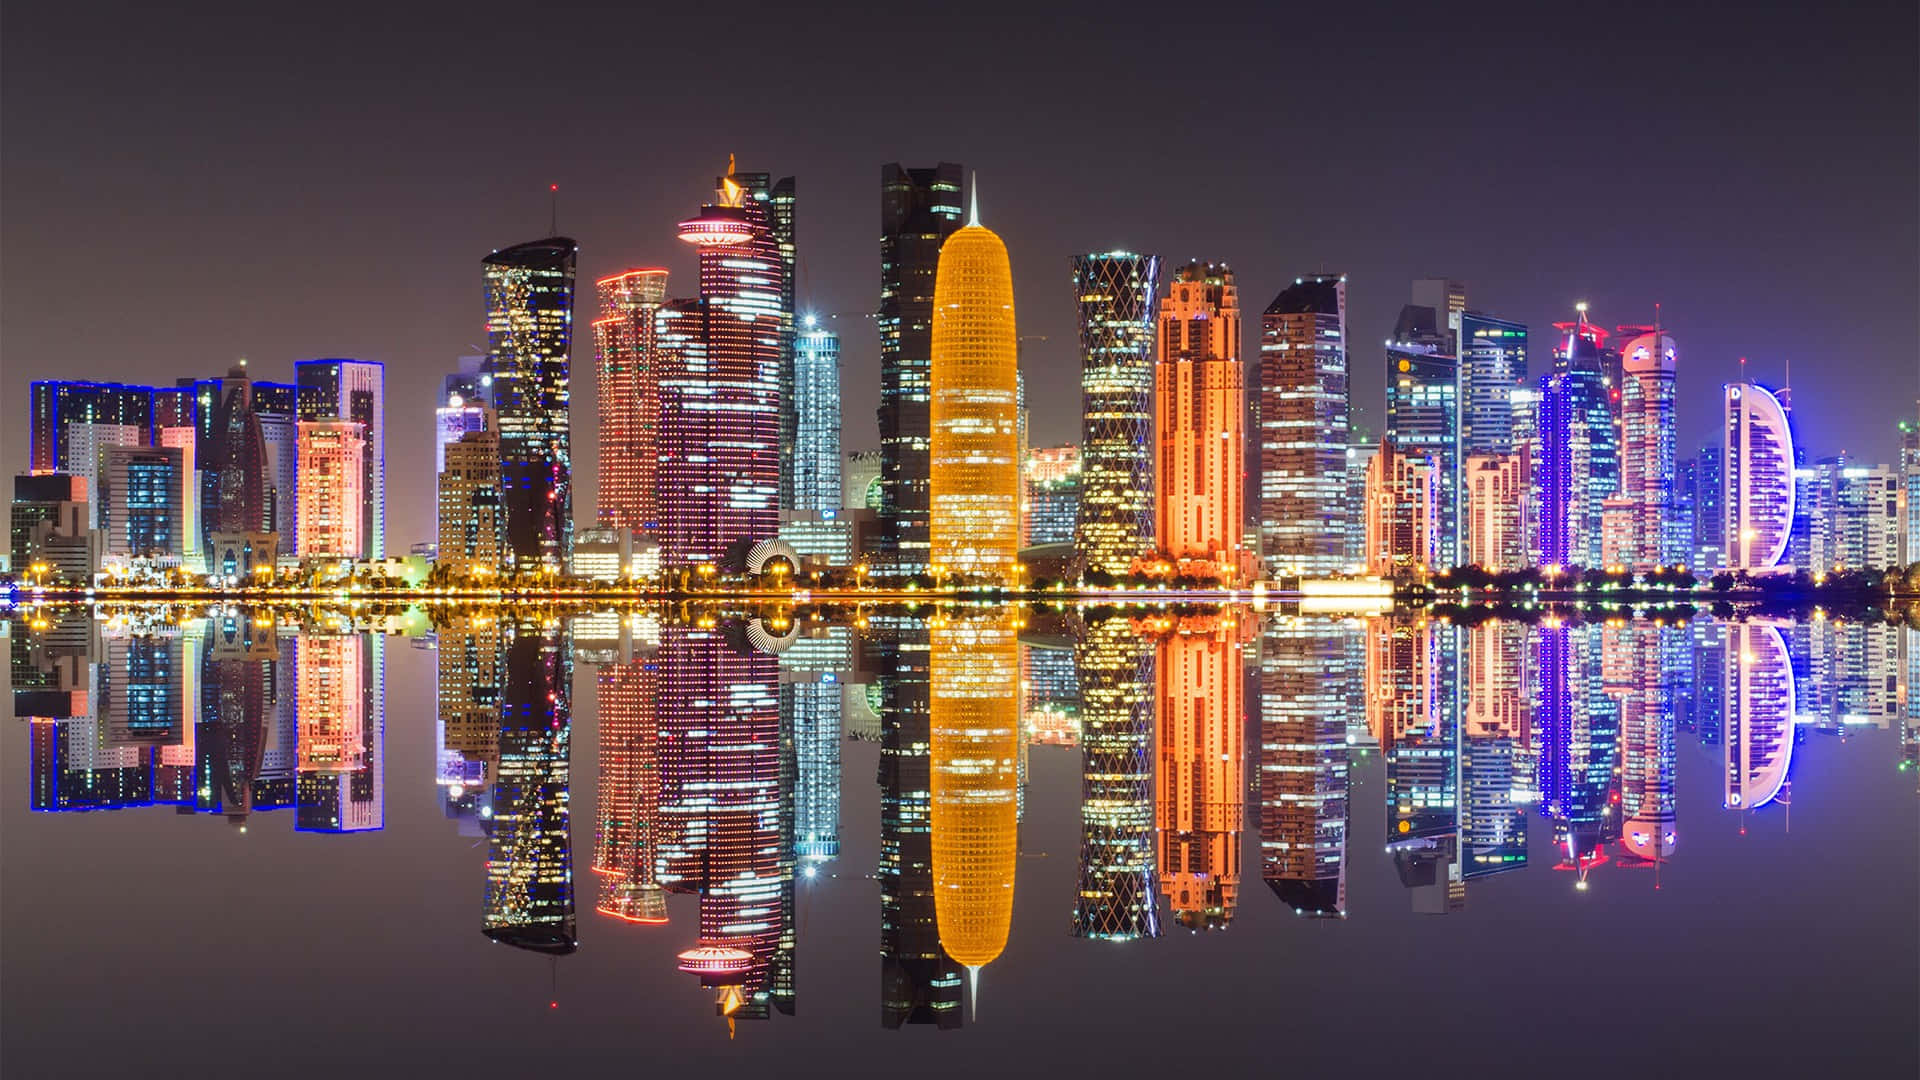 Doha, Qatar's modern capital city